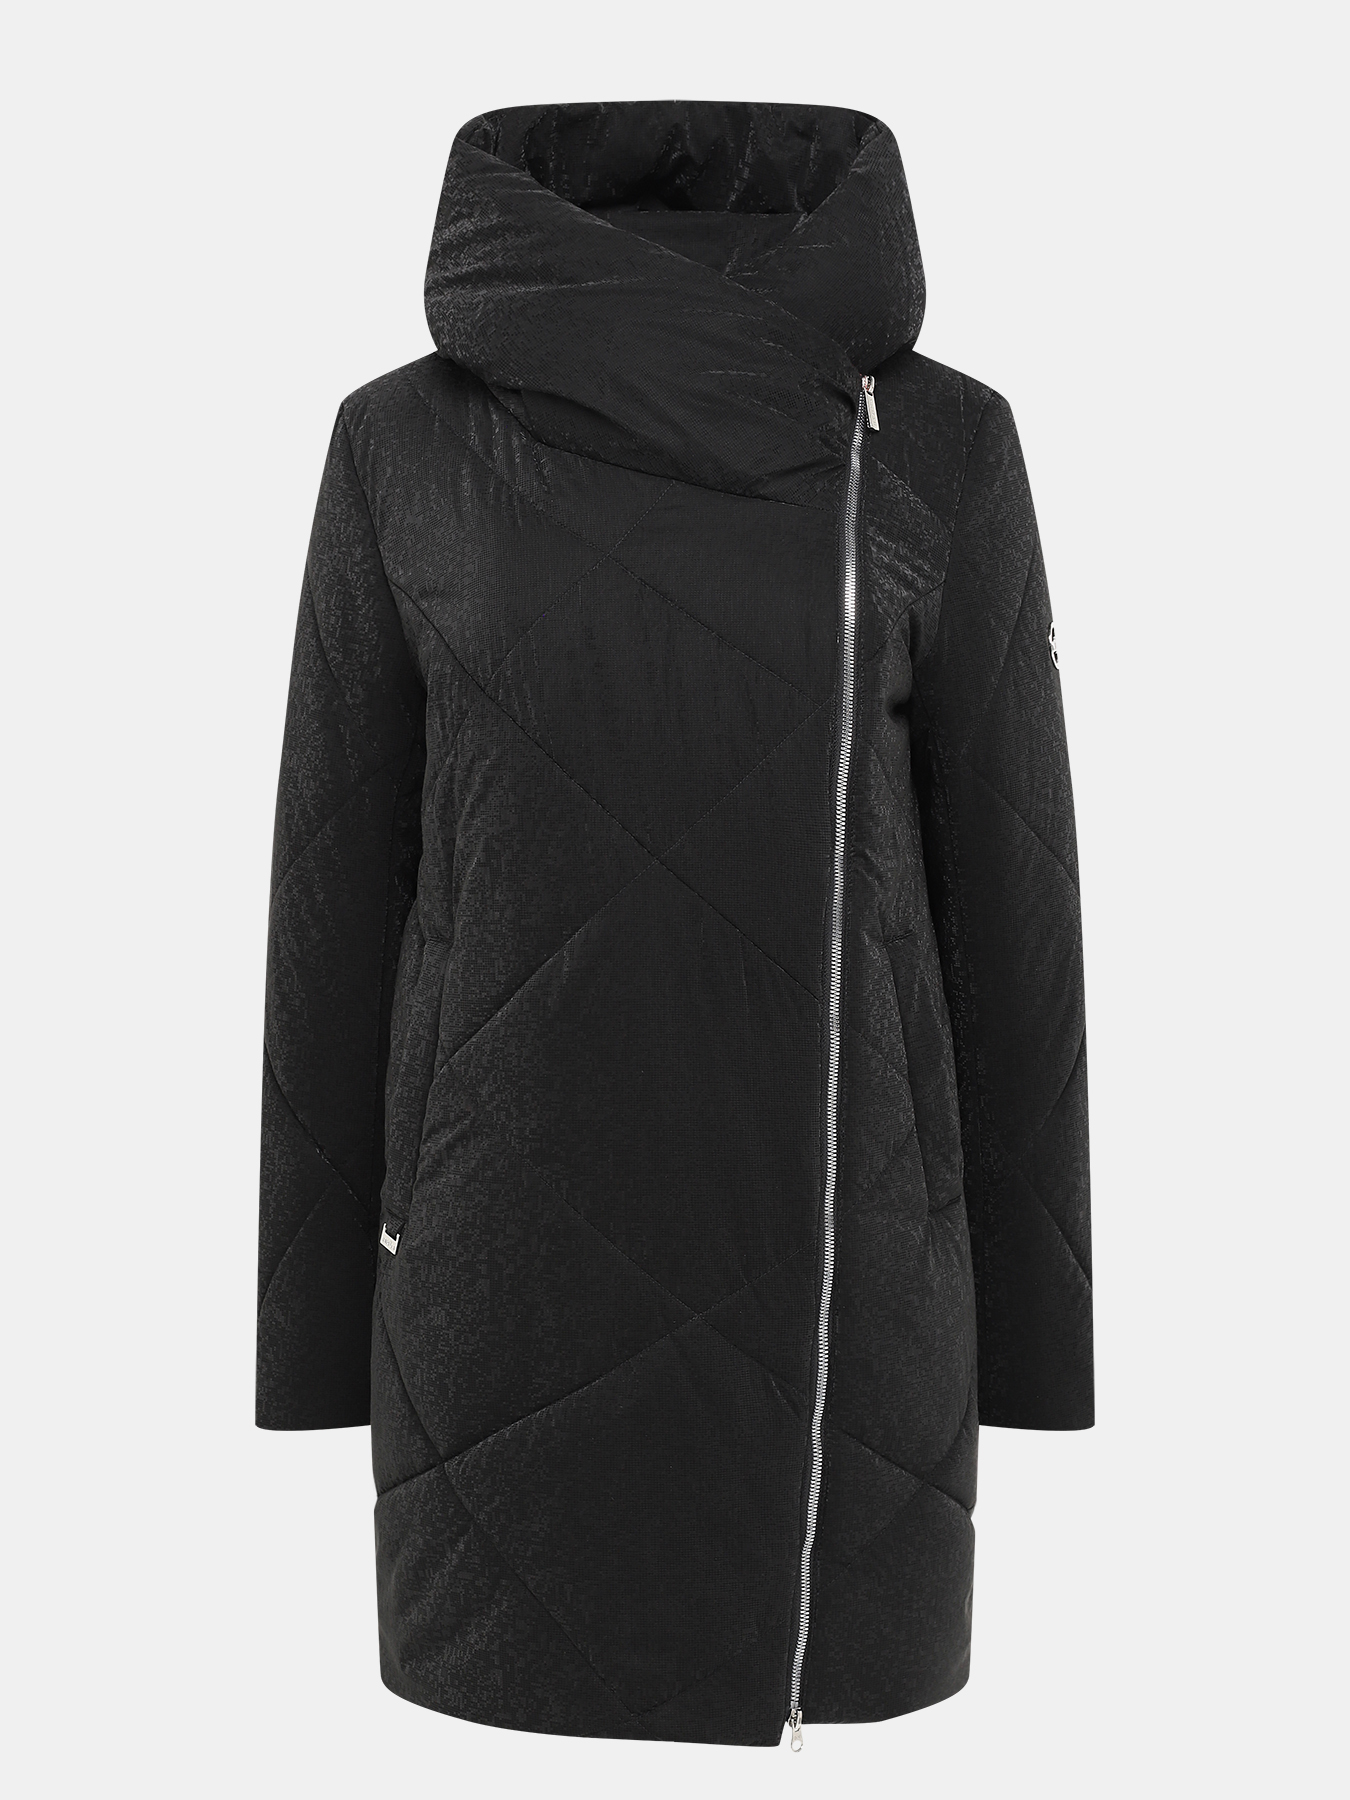 Пальто зимнее Maritta 433524-022, цвет черный, размер 48